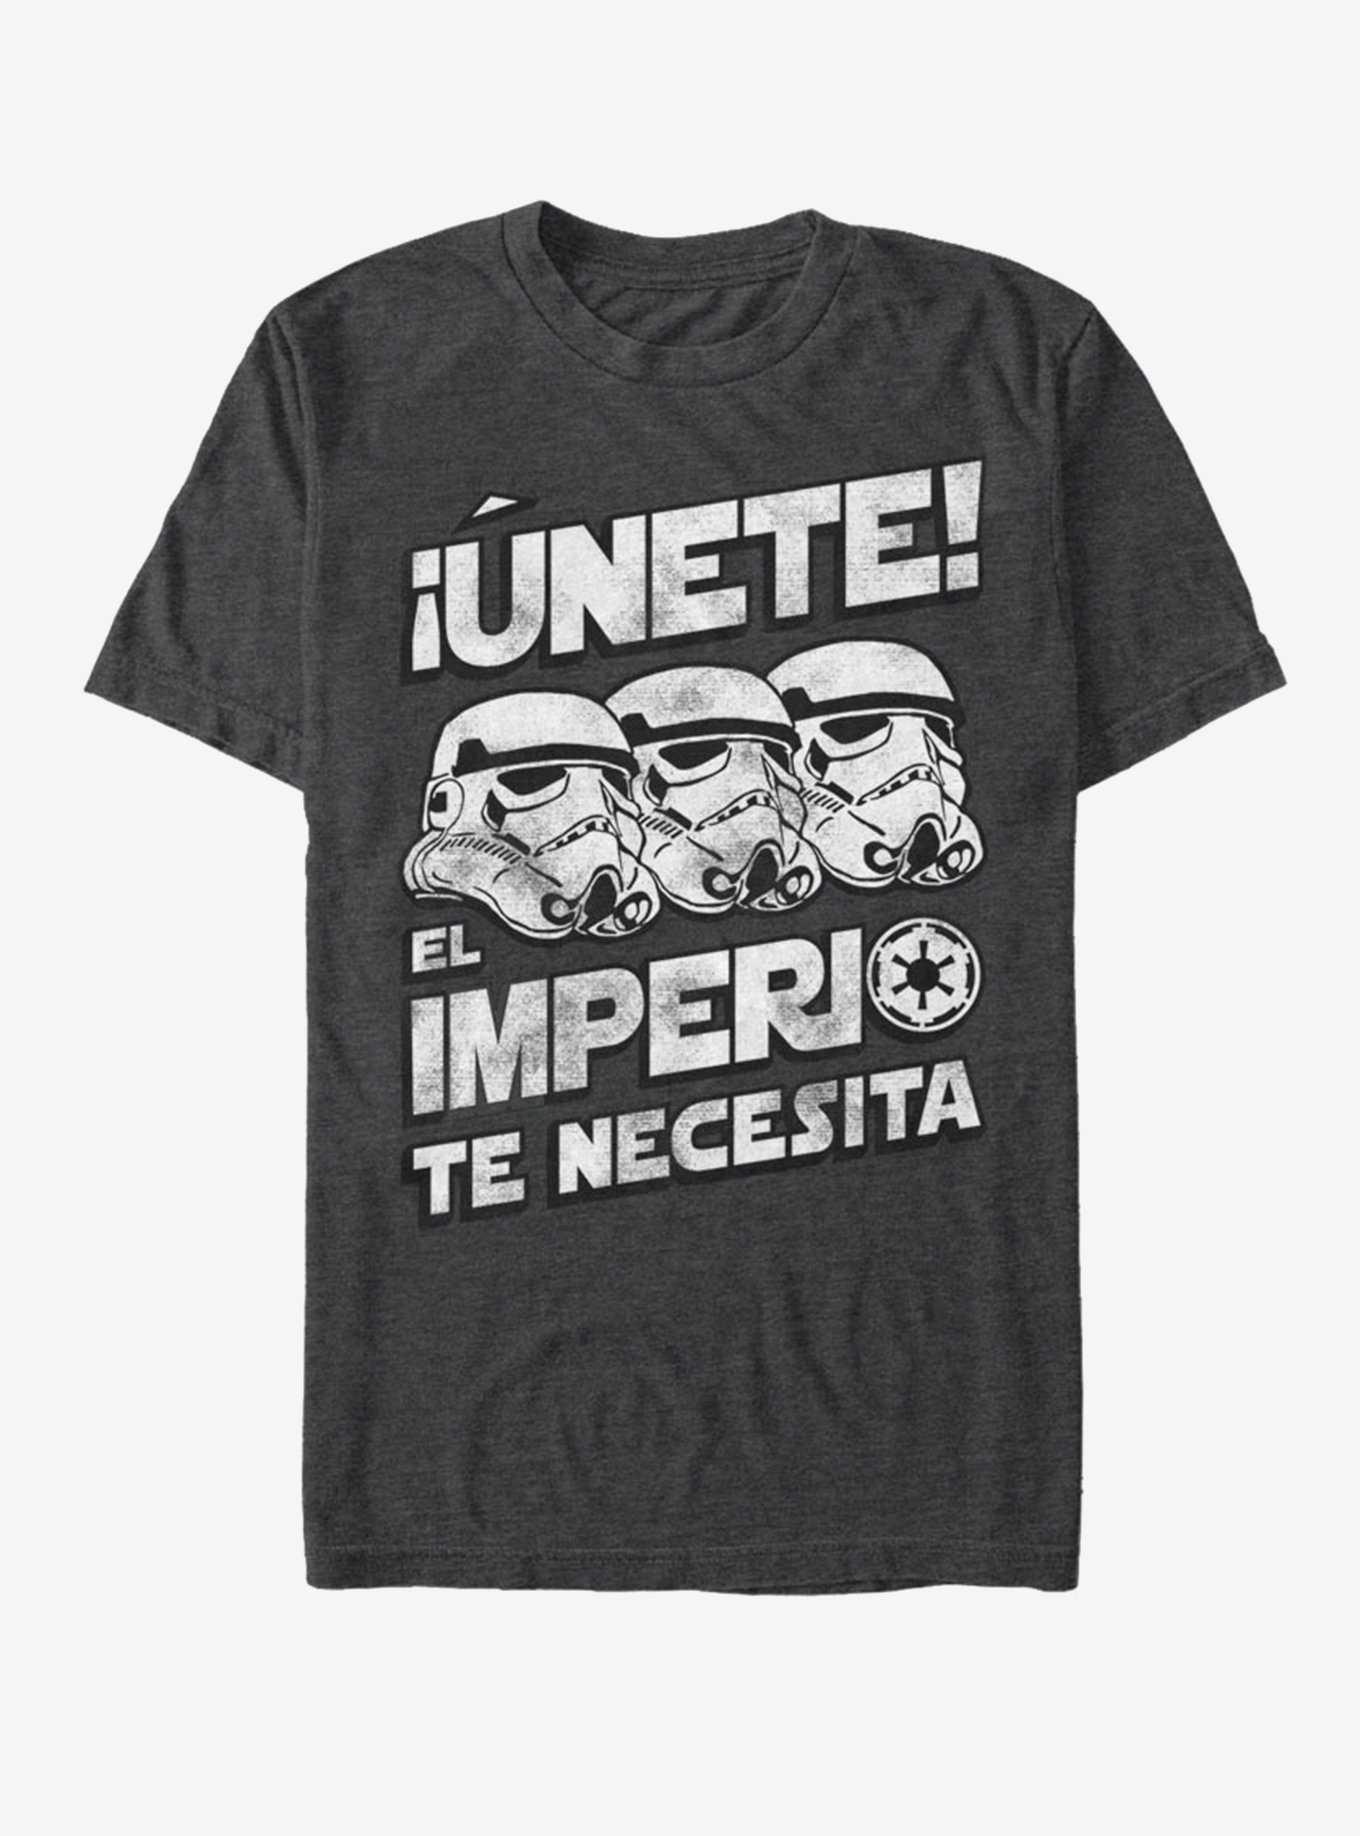 Star Wars Unete T-Shirt, , hi-res